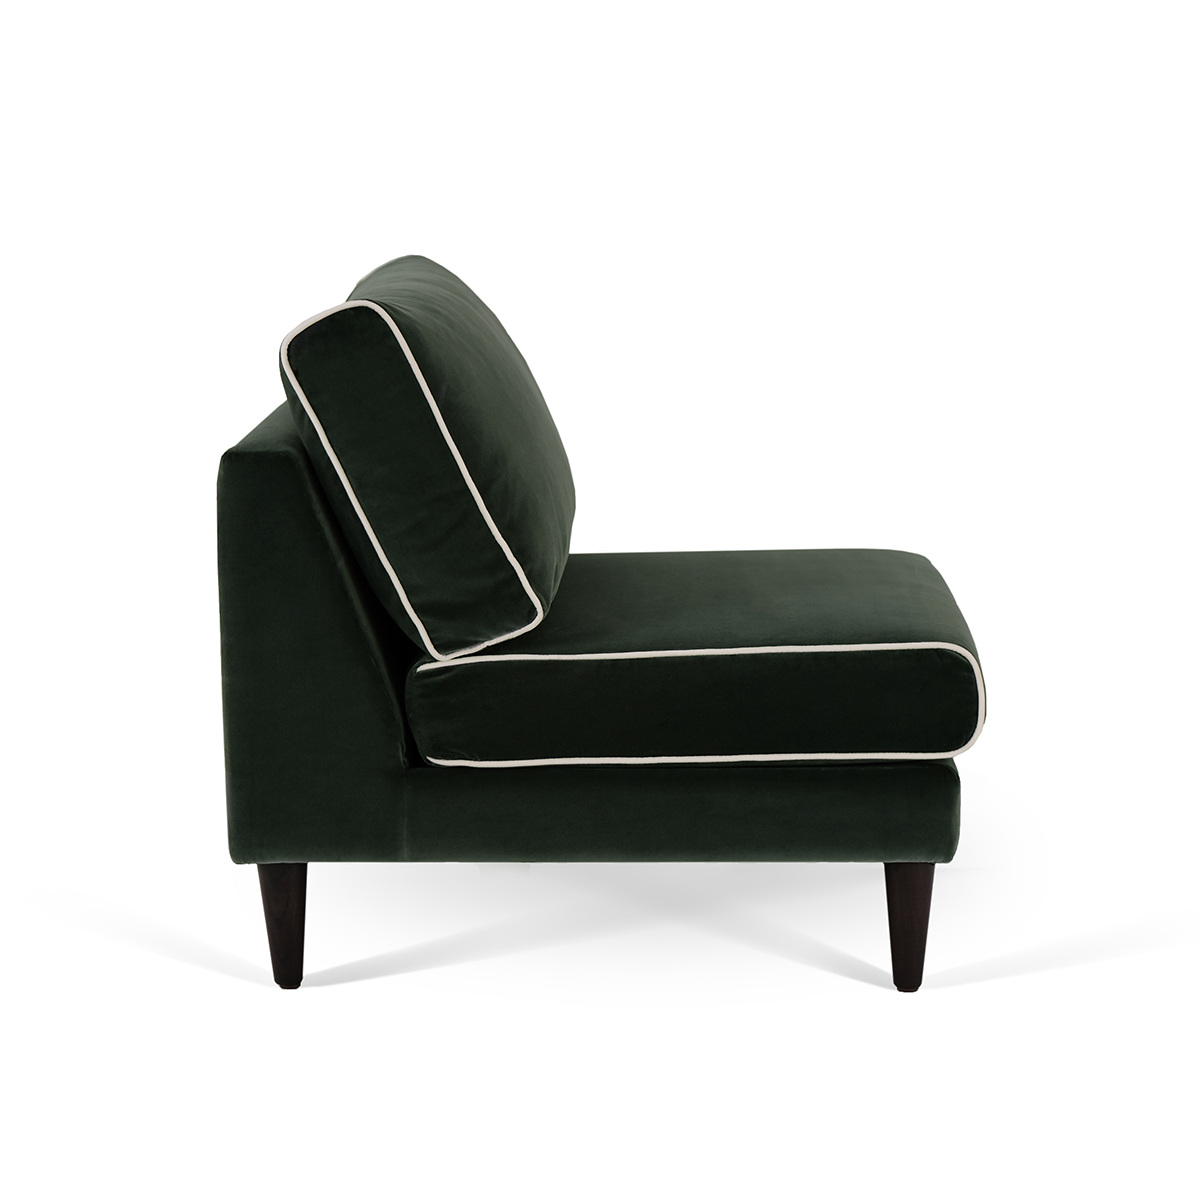 Flip Chair Noa, Green / Black- H80 x W80 x D75 cm - Velvet / Wood - image 3